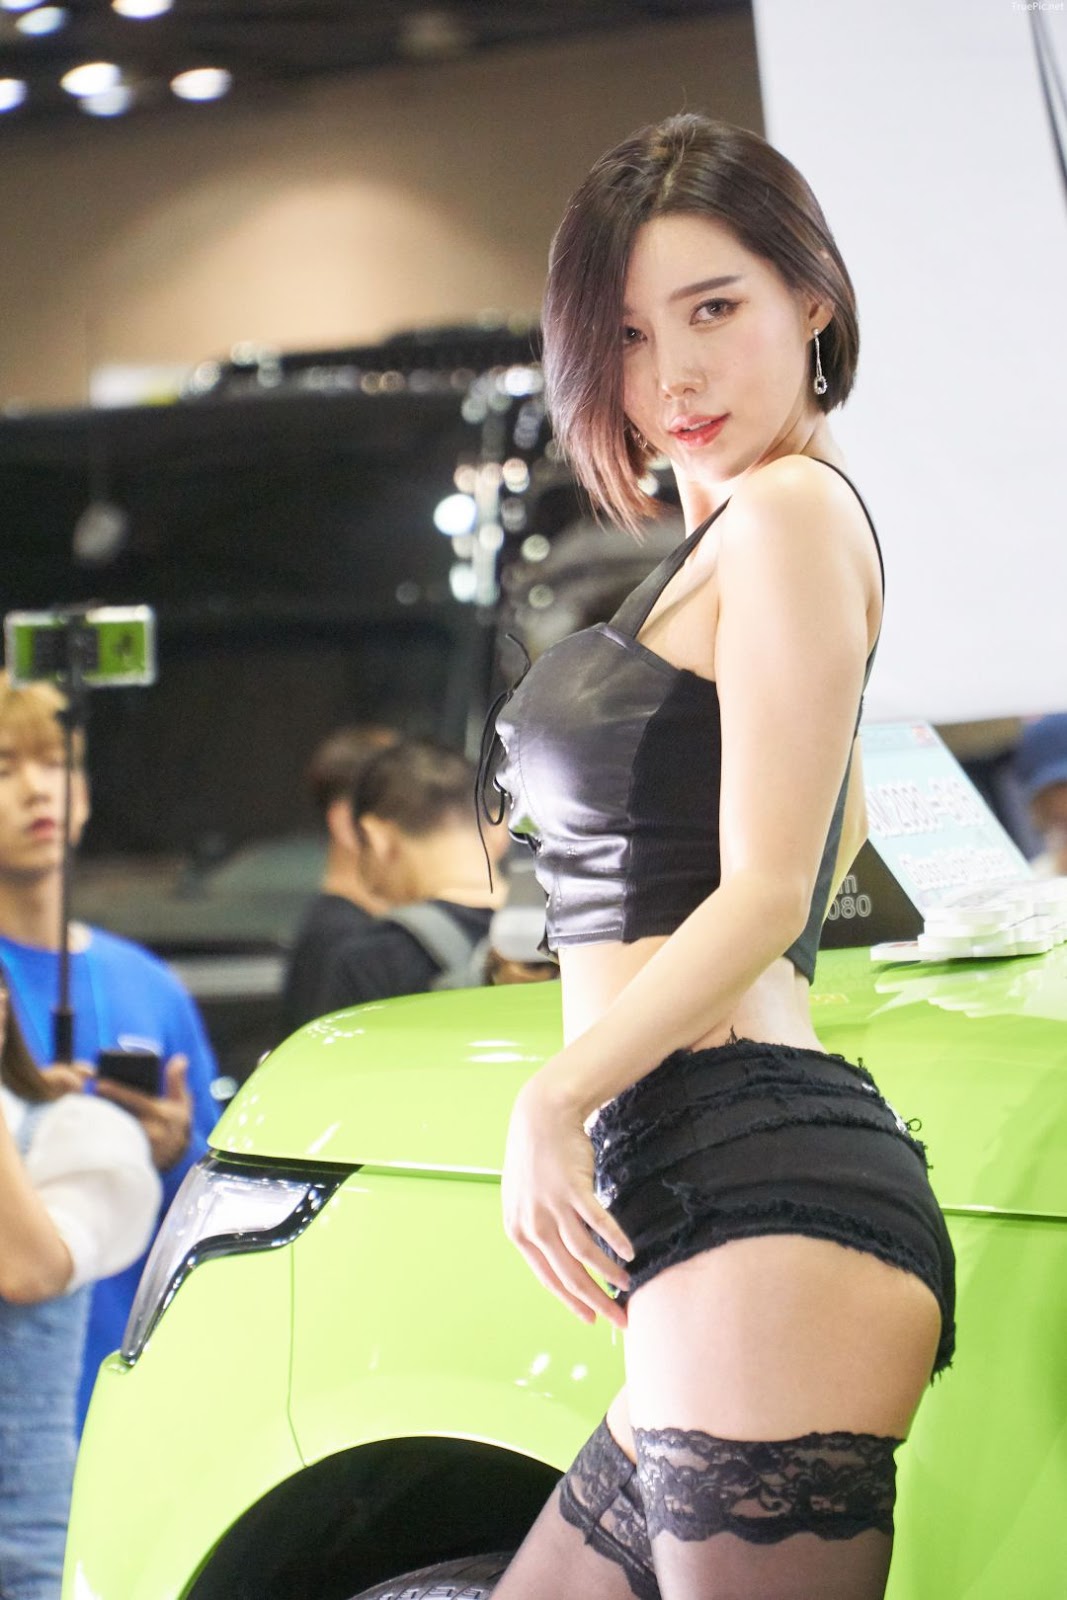 Korean Racing Model - Song Jooa - Seoul Auto Salon 2019 - Picture 33